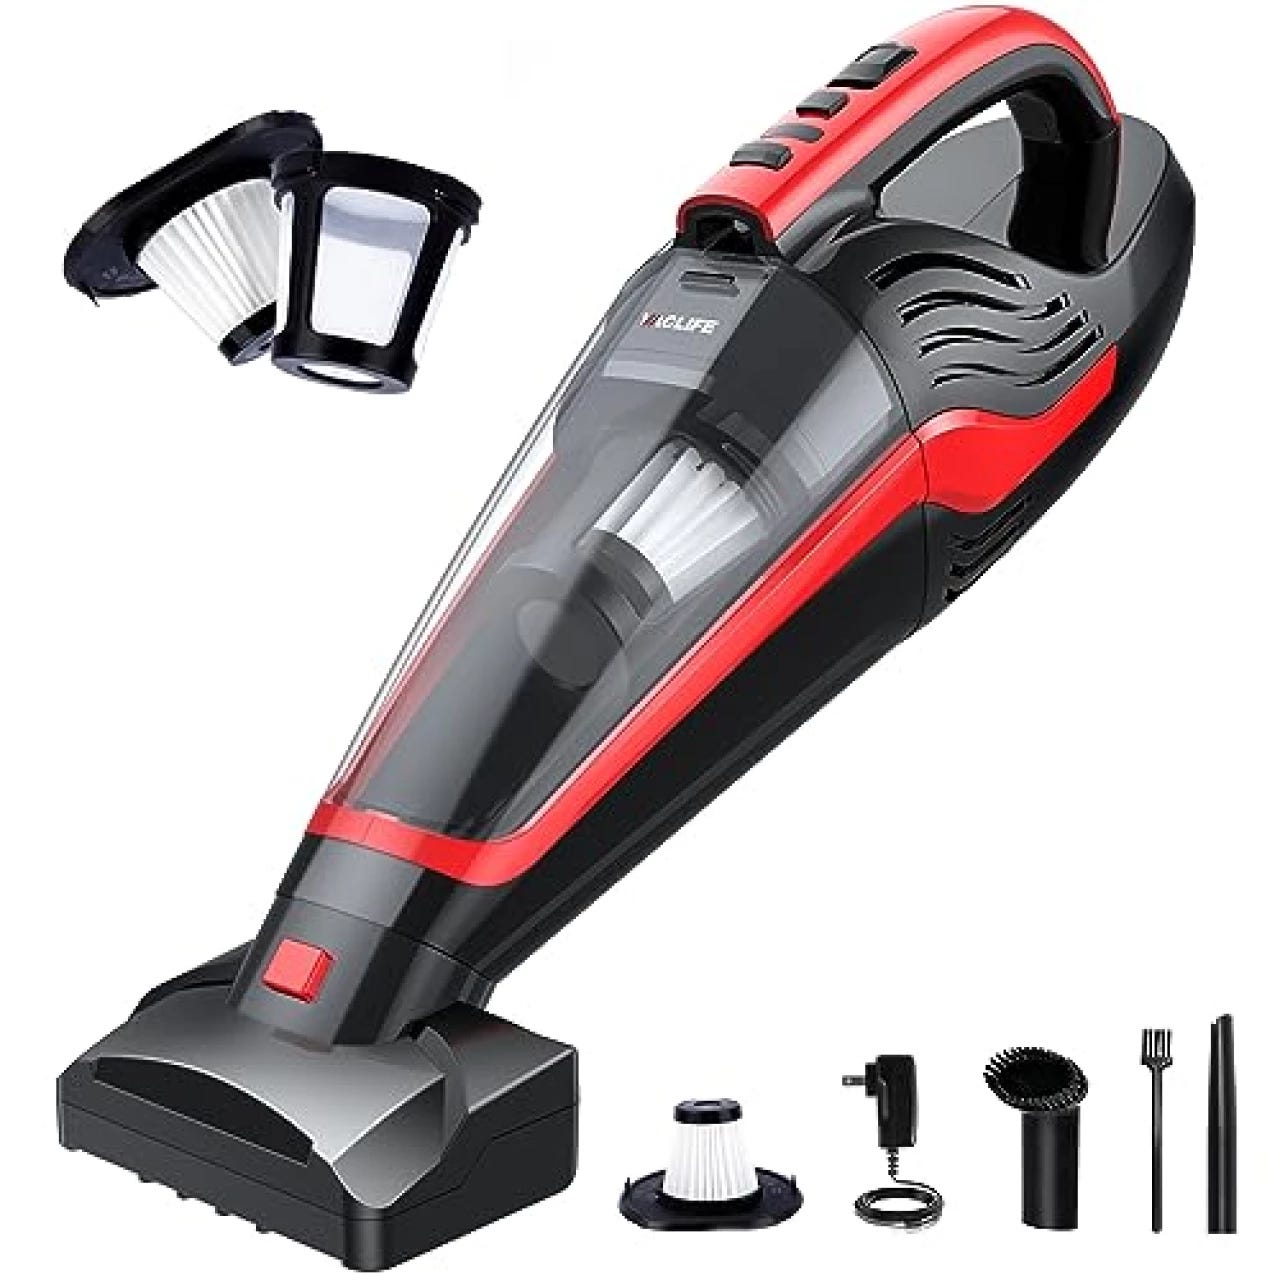 BLACK+DECKER Dustbuster QuickClean Handheld Vacuum, Cordless, Lightweight &  Portable, Ergonomic Design, Red